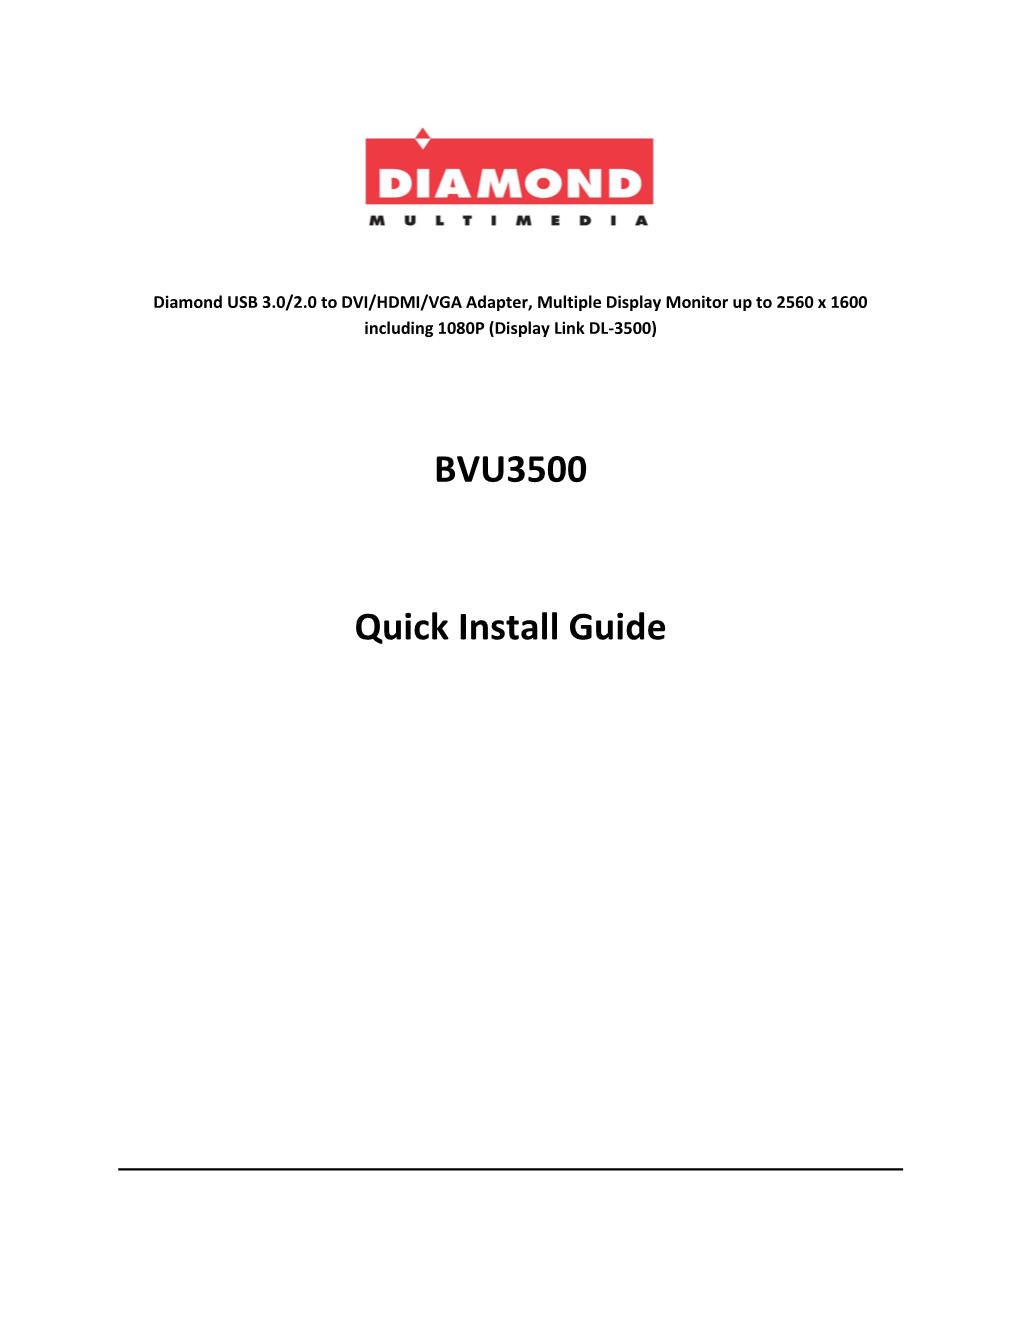 BVU3500 Quick Install Guide